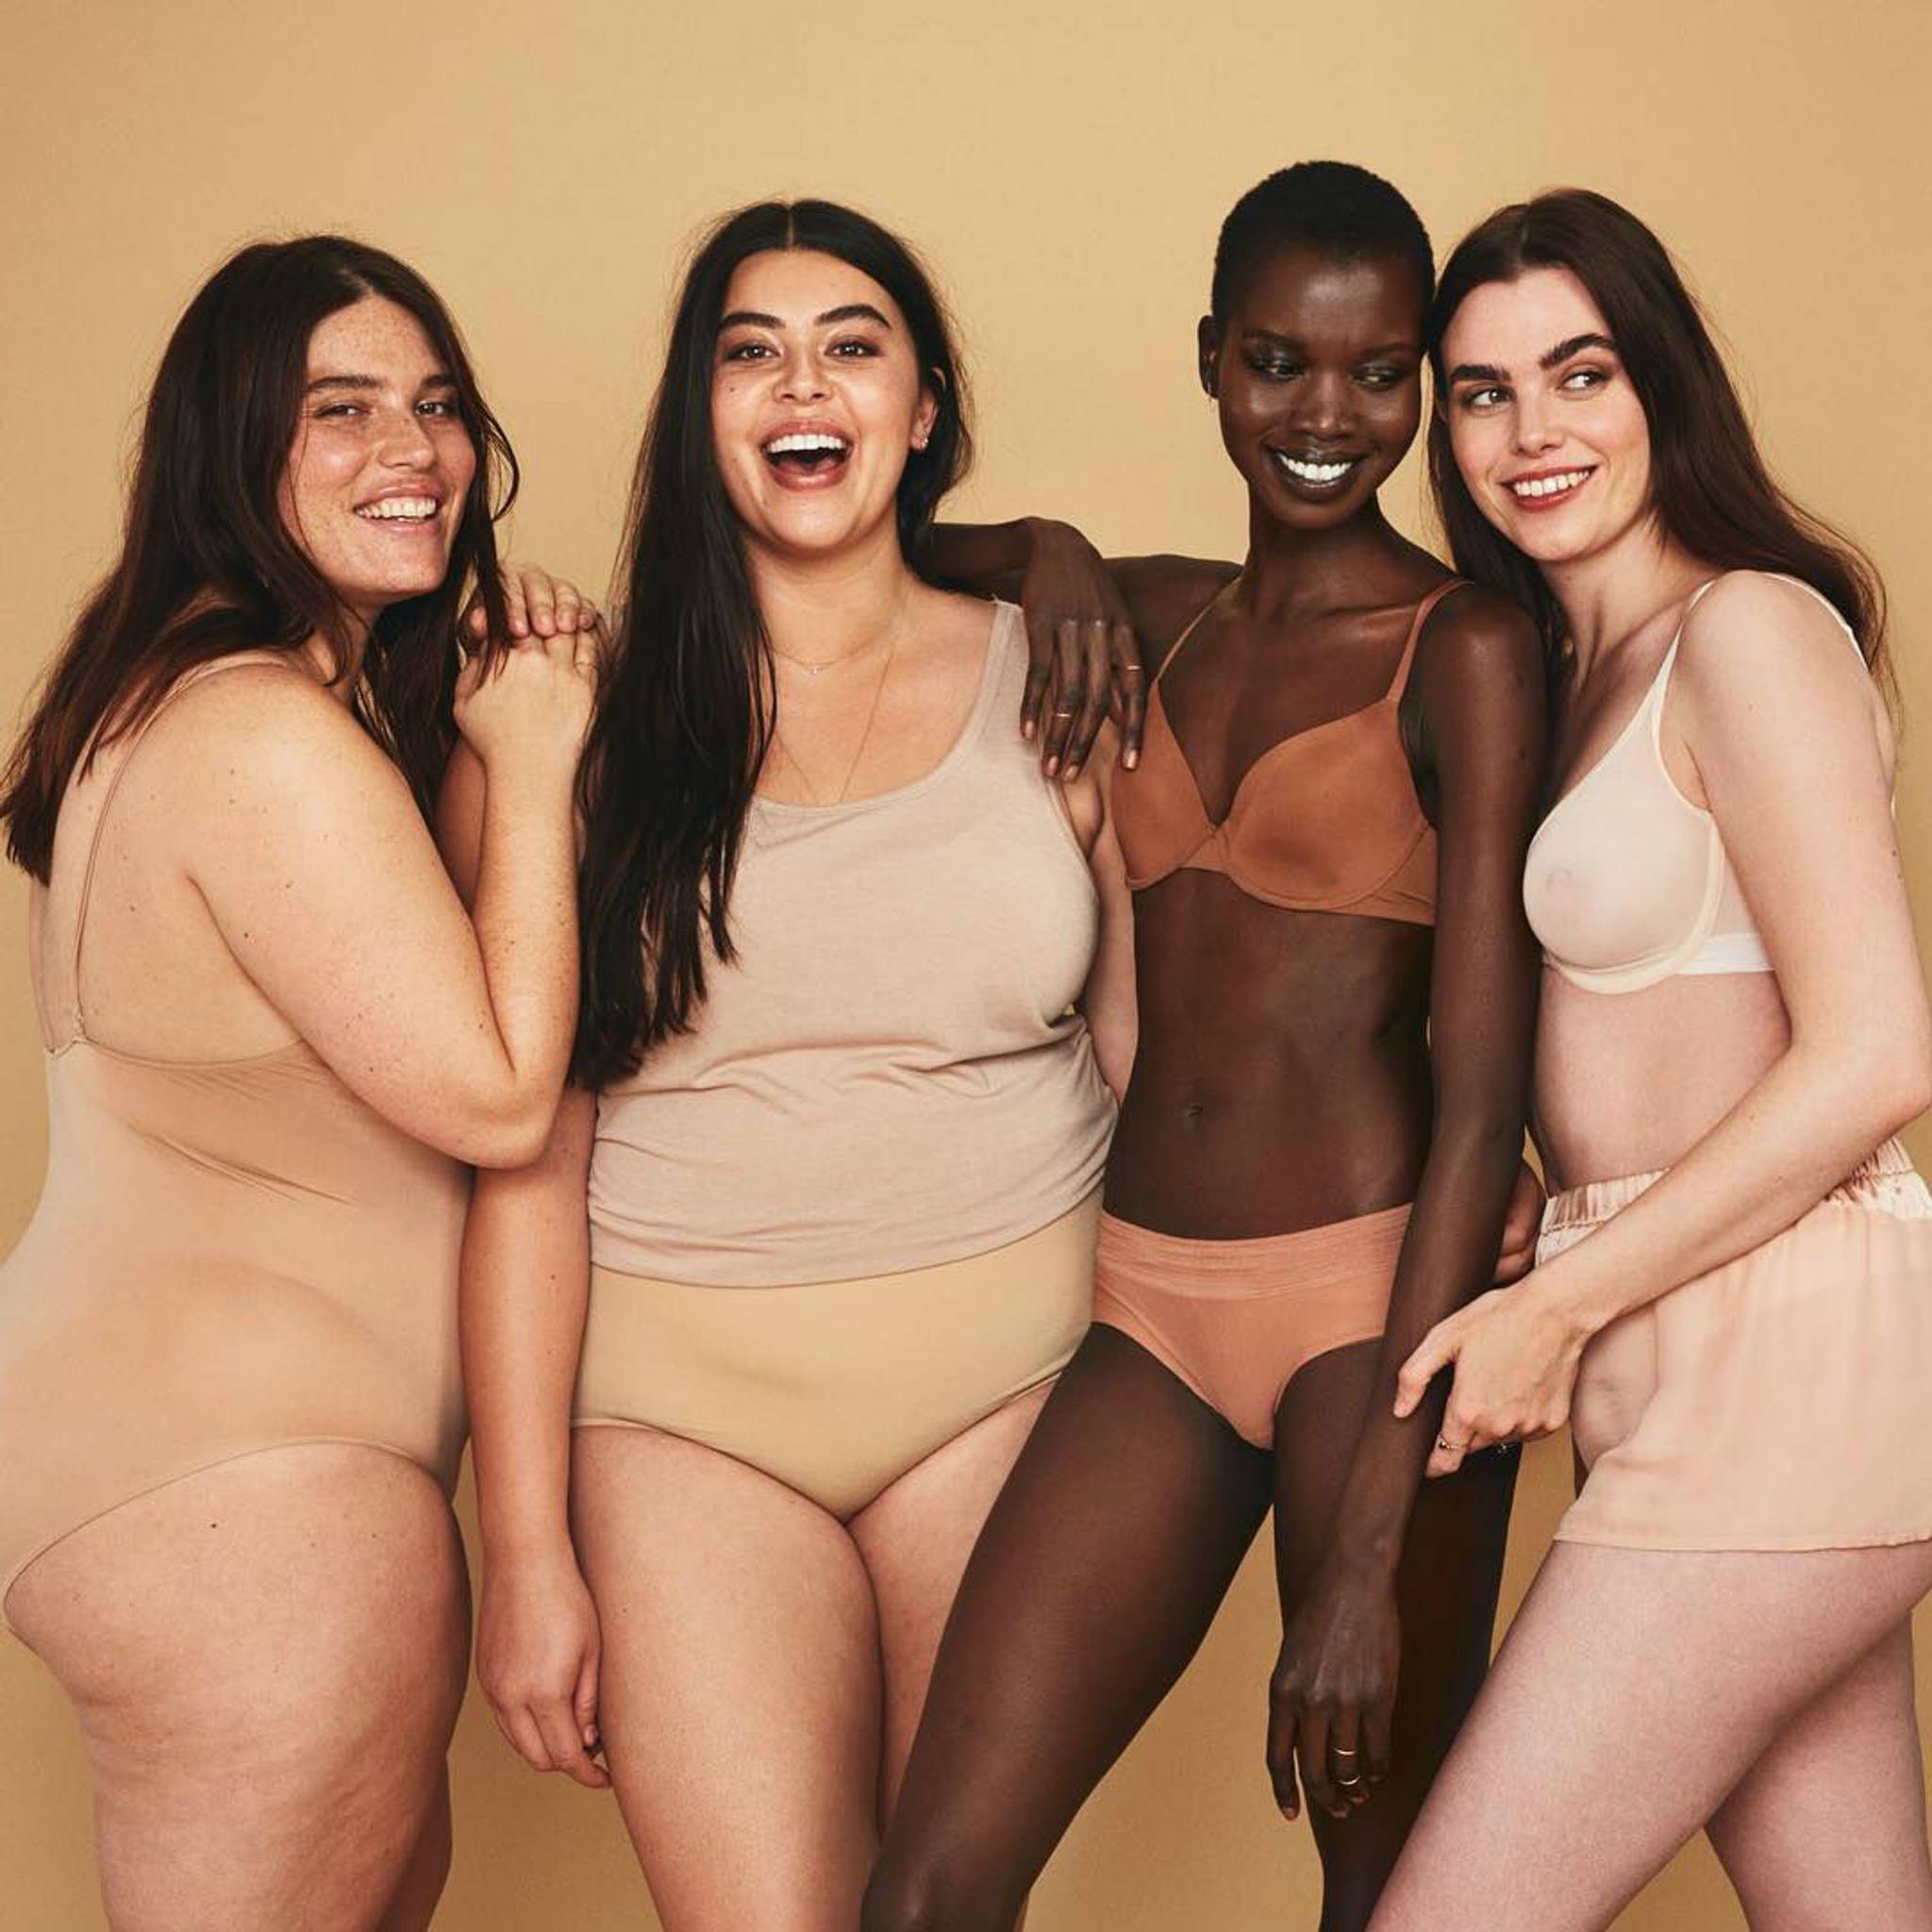 Babor's unretouched ad promotes authentic diversity